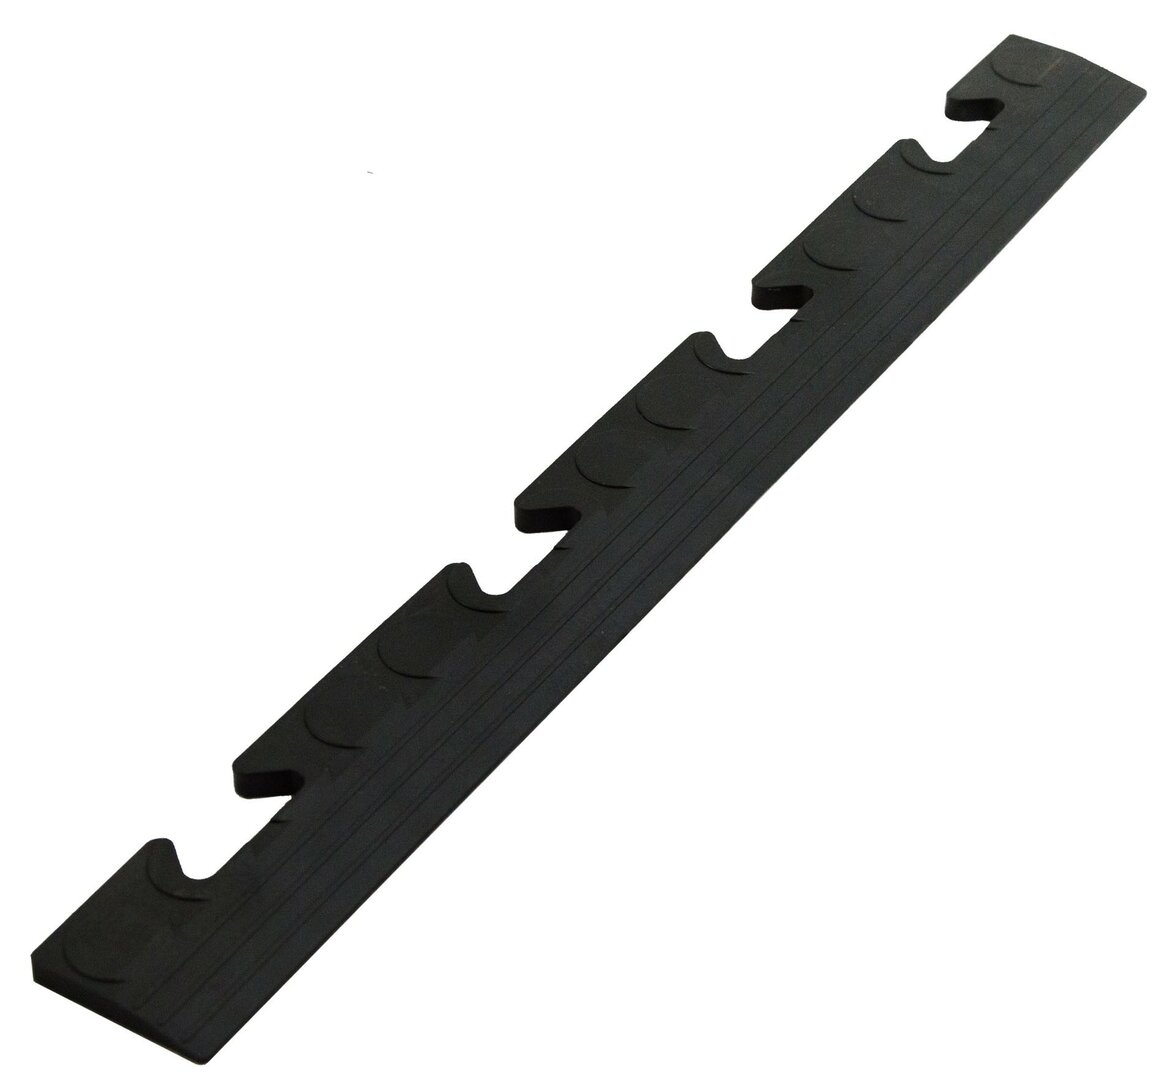 Černý PVC vinylový nájezd "samice" pro dlaždice Tenax (bubbles) - délka 48 cm, šířka 5,1 cm, výška 0,8 cm